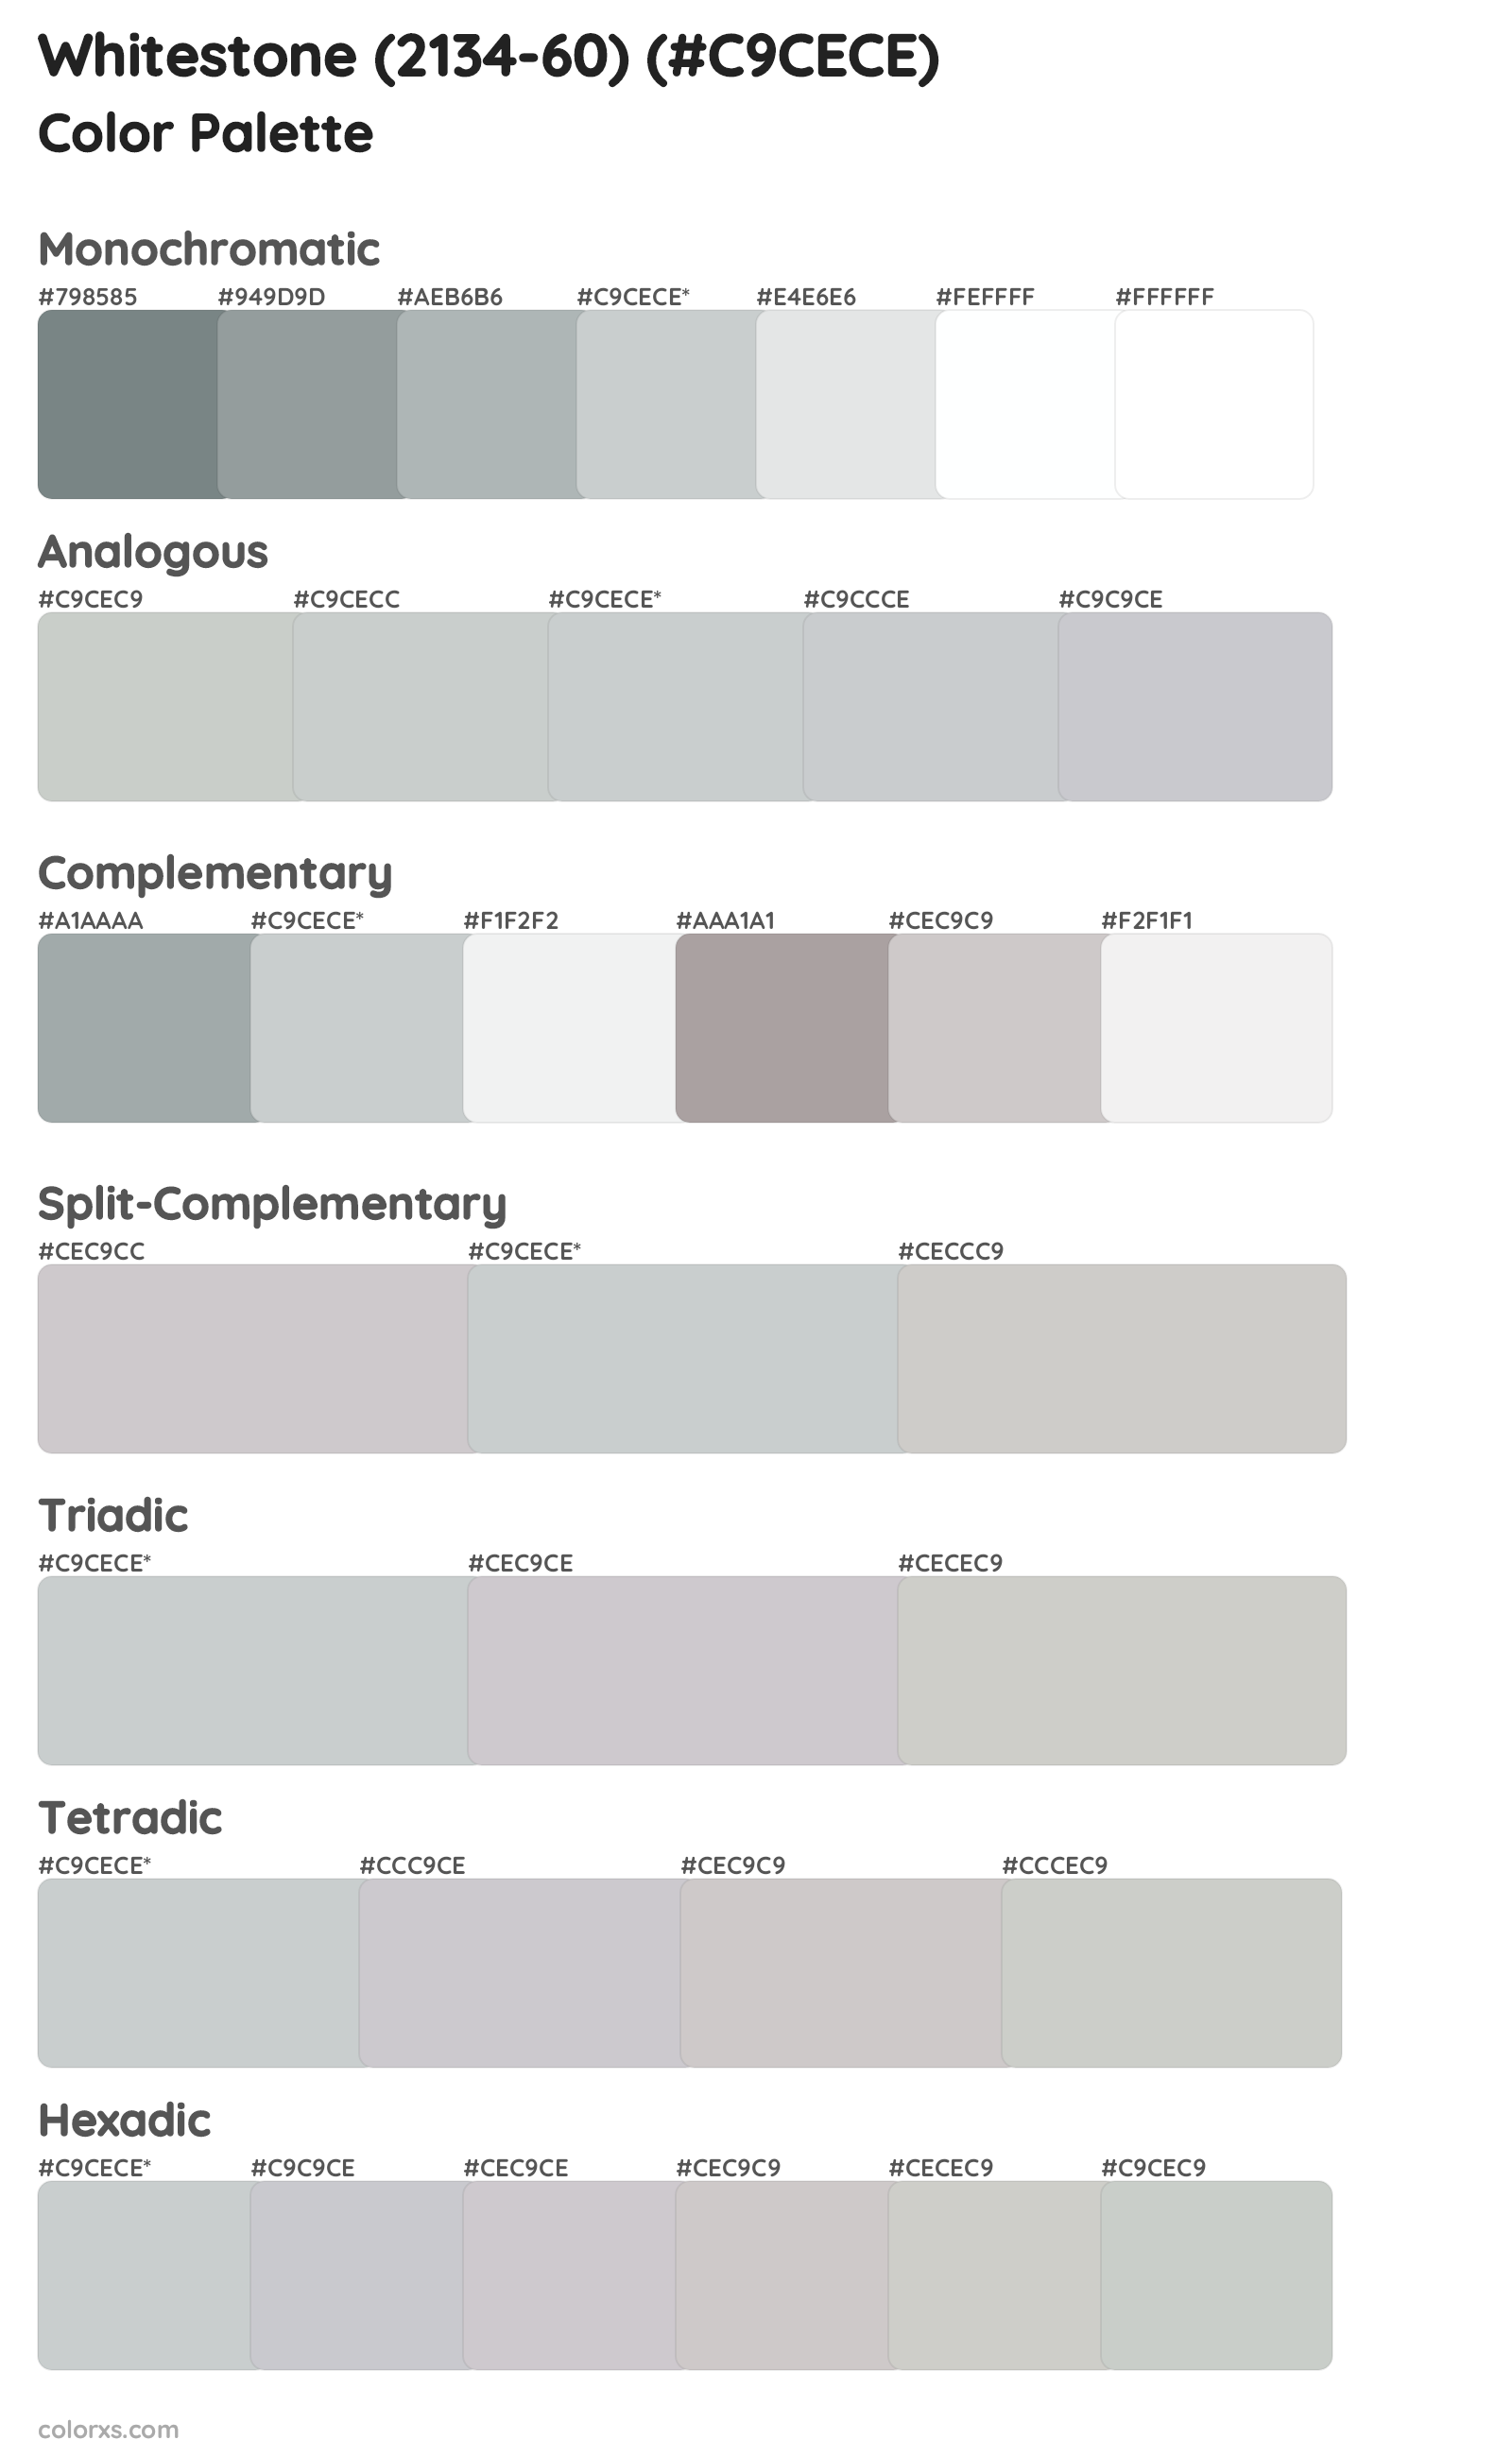 Whitestone (2134-60) Color Scheme Palettes